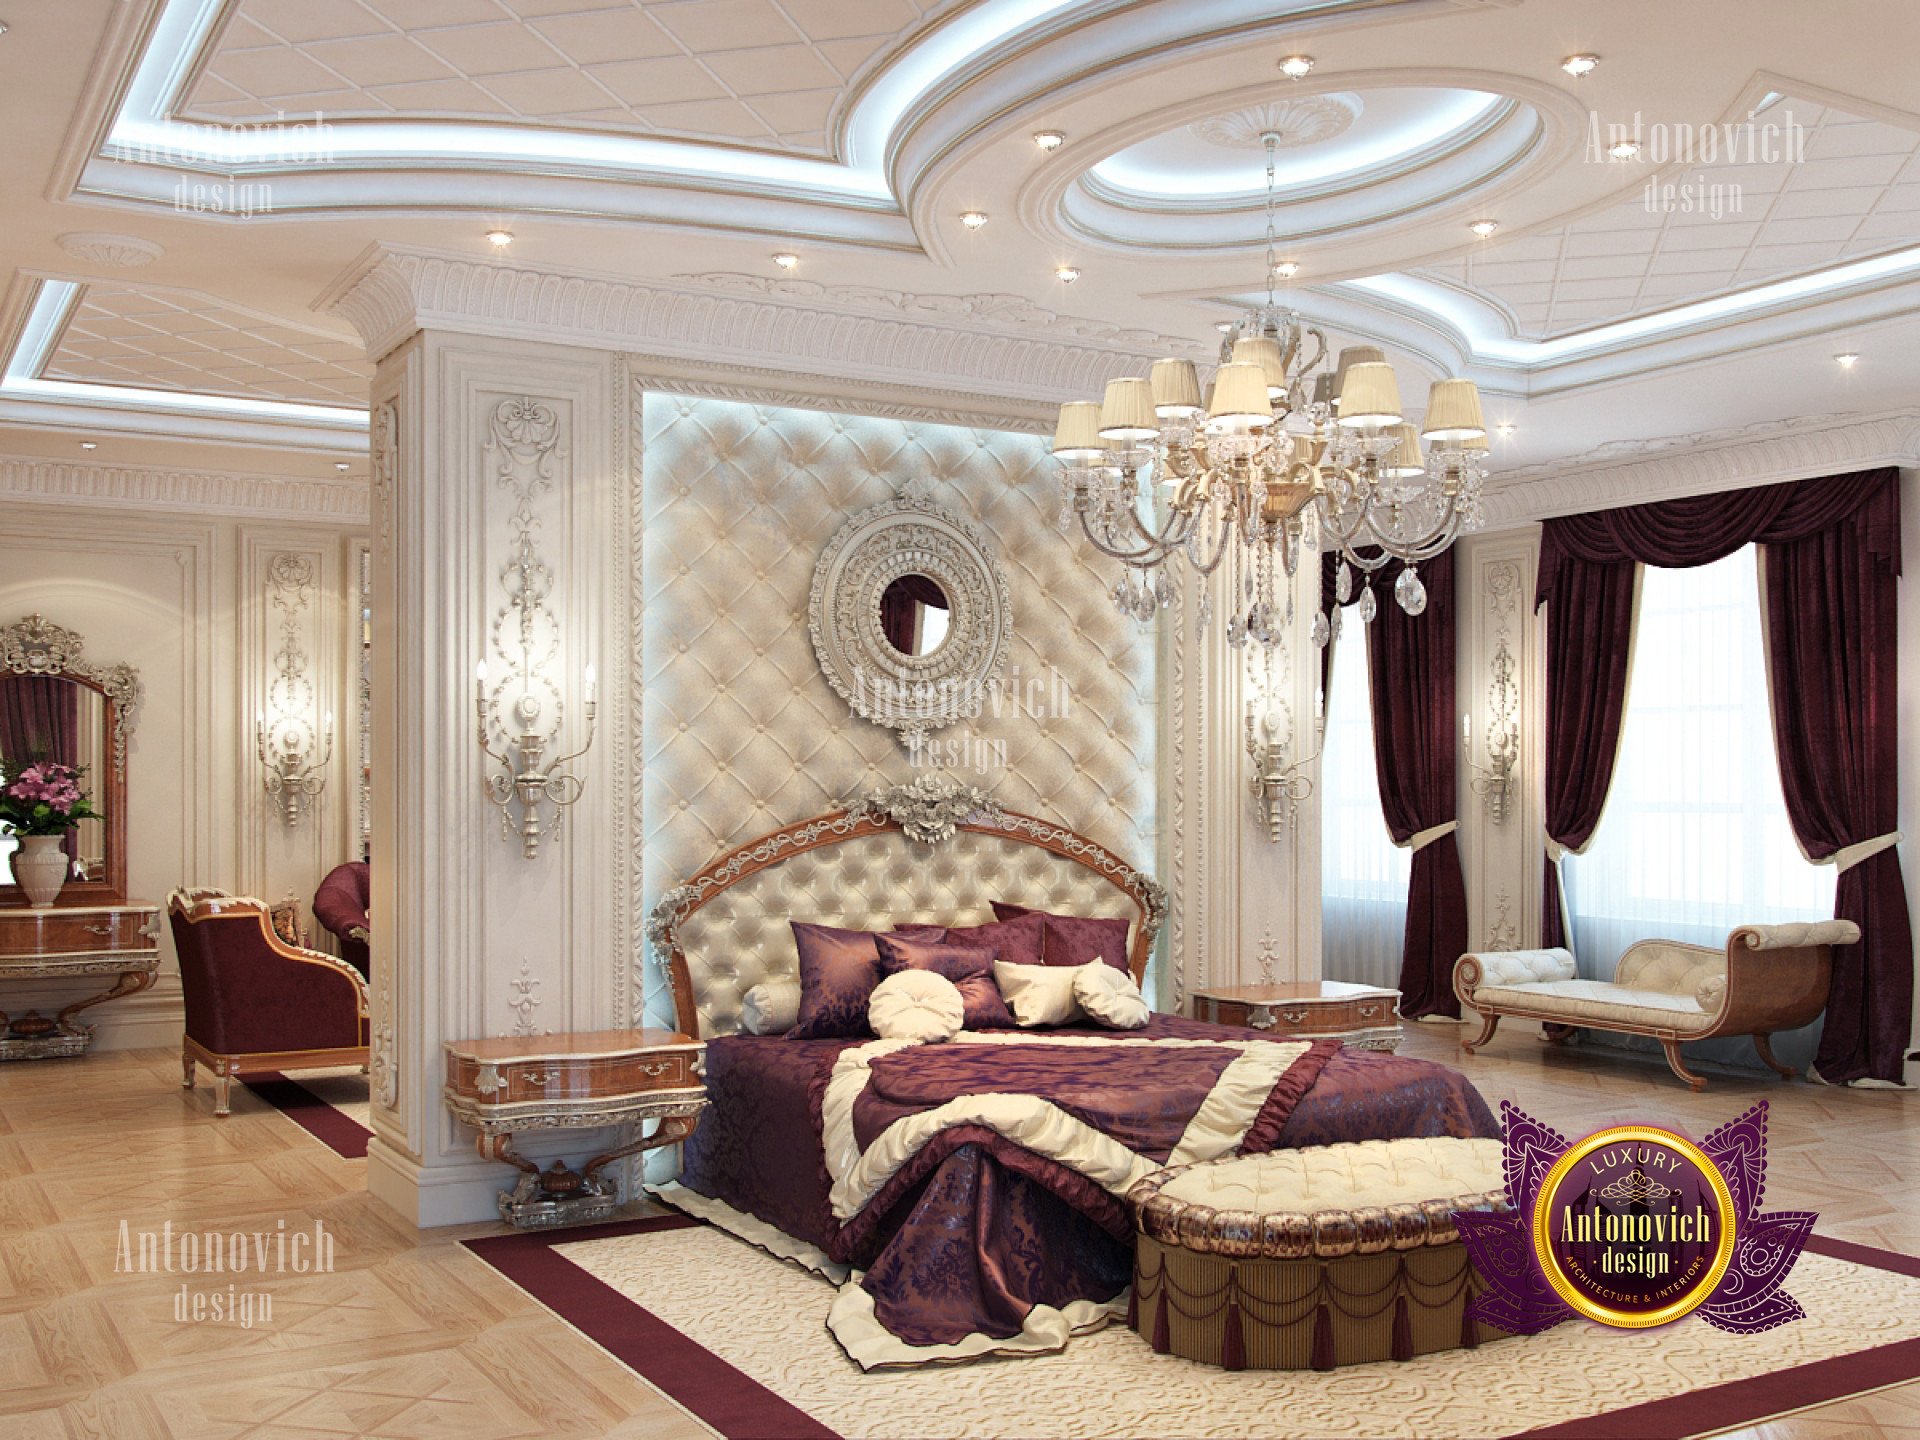 iRoyal Bedroomi Florida luxury interior design company in 